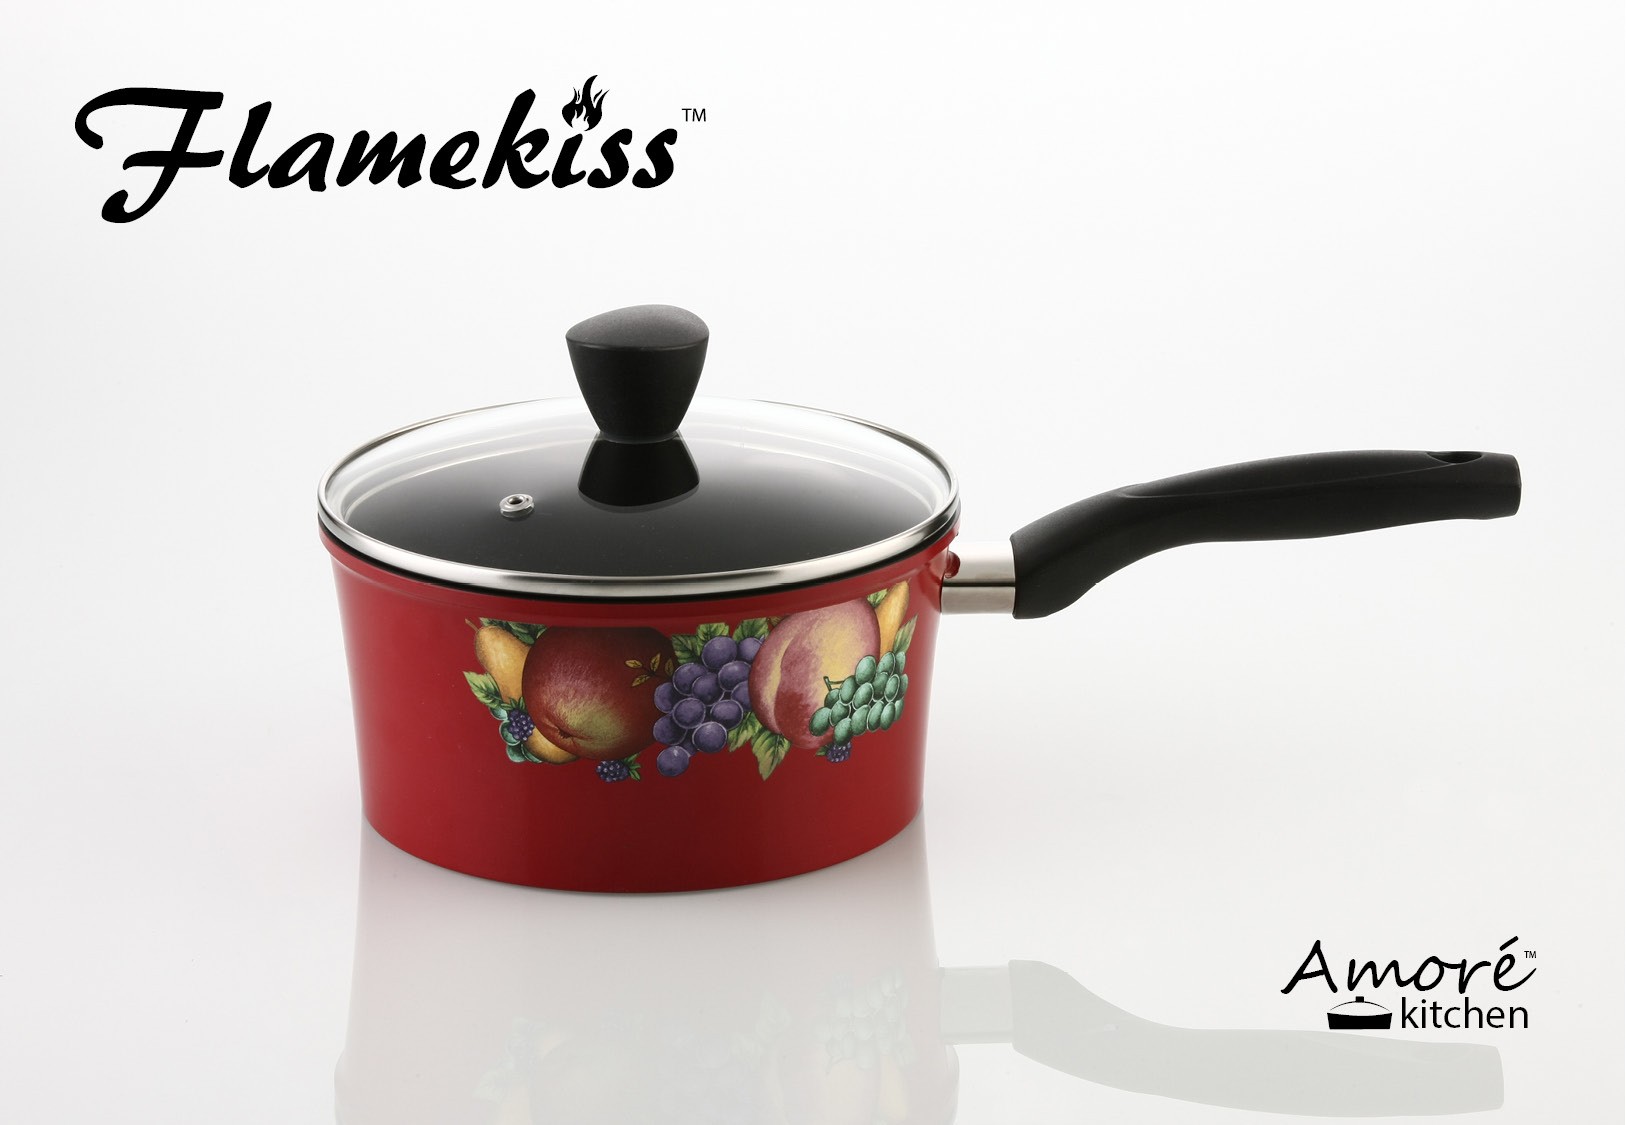 Flamekiss 2-Quart Red Ceramic Coated Nonstick Saucepan